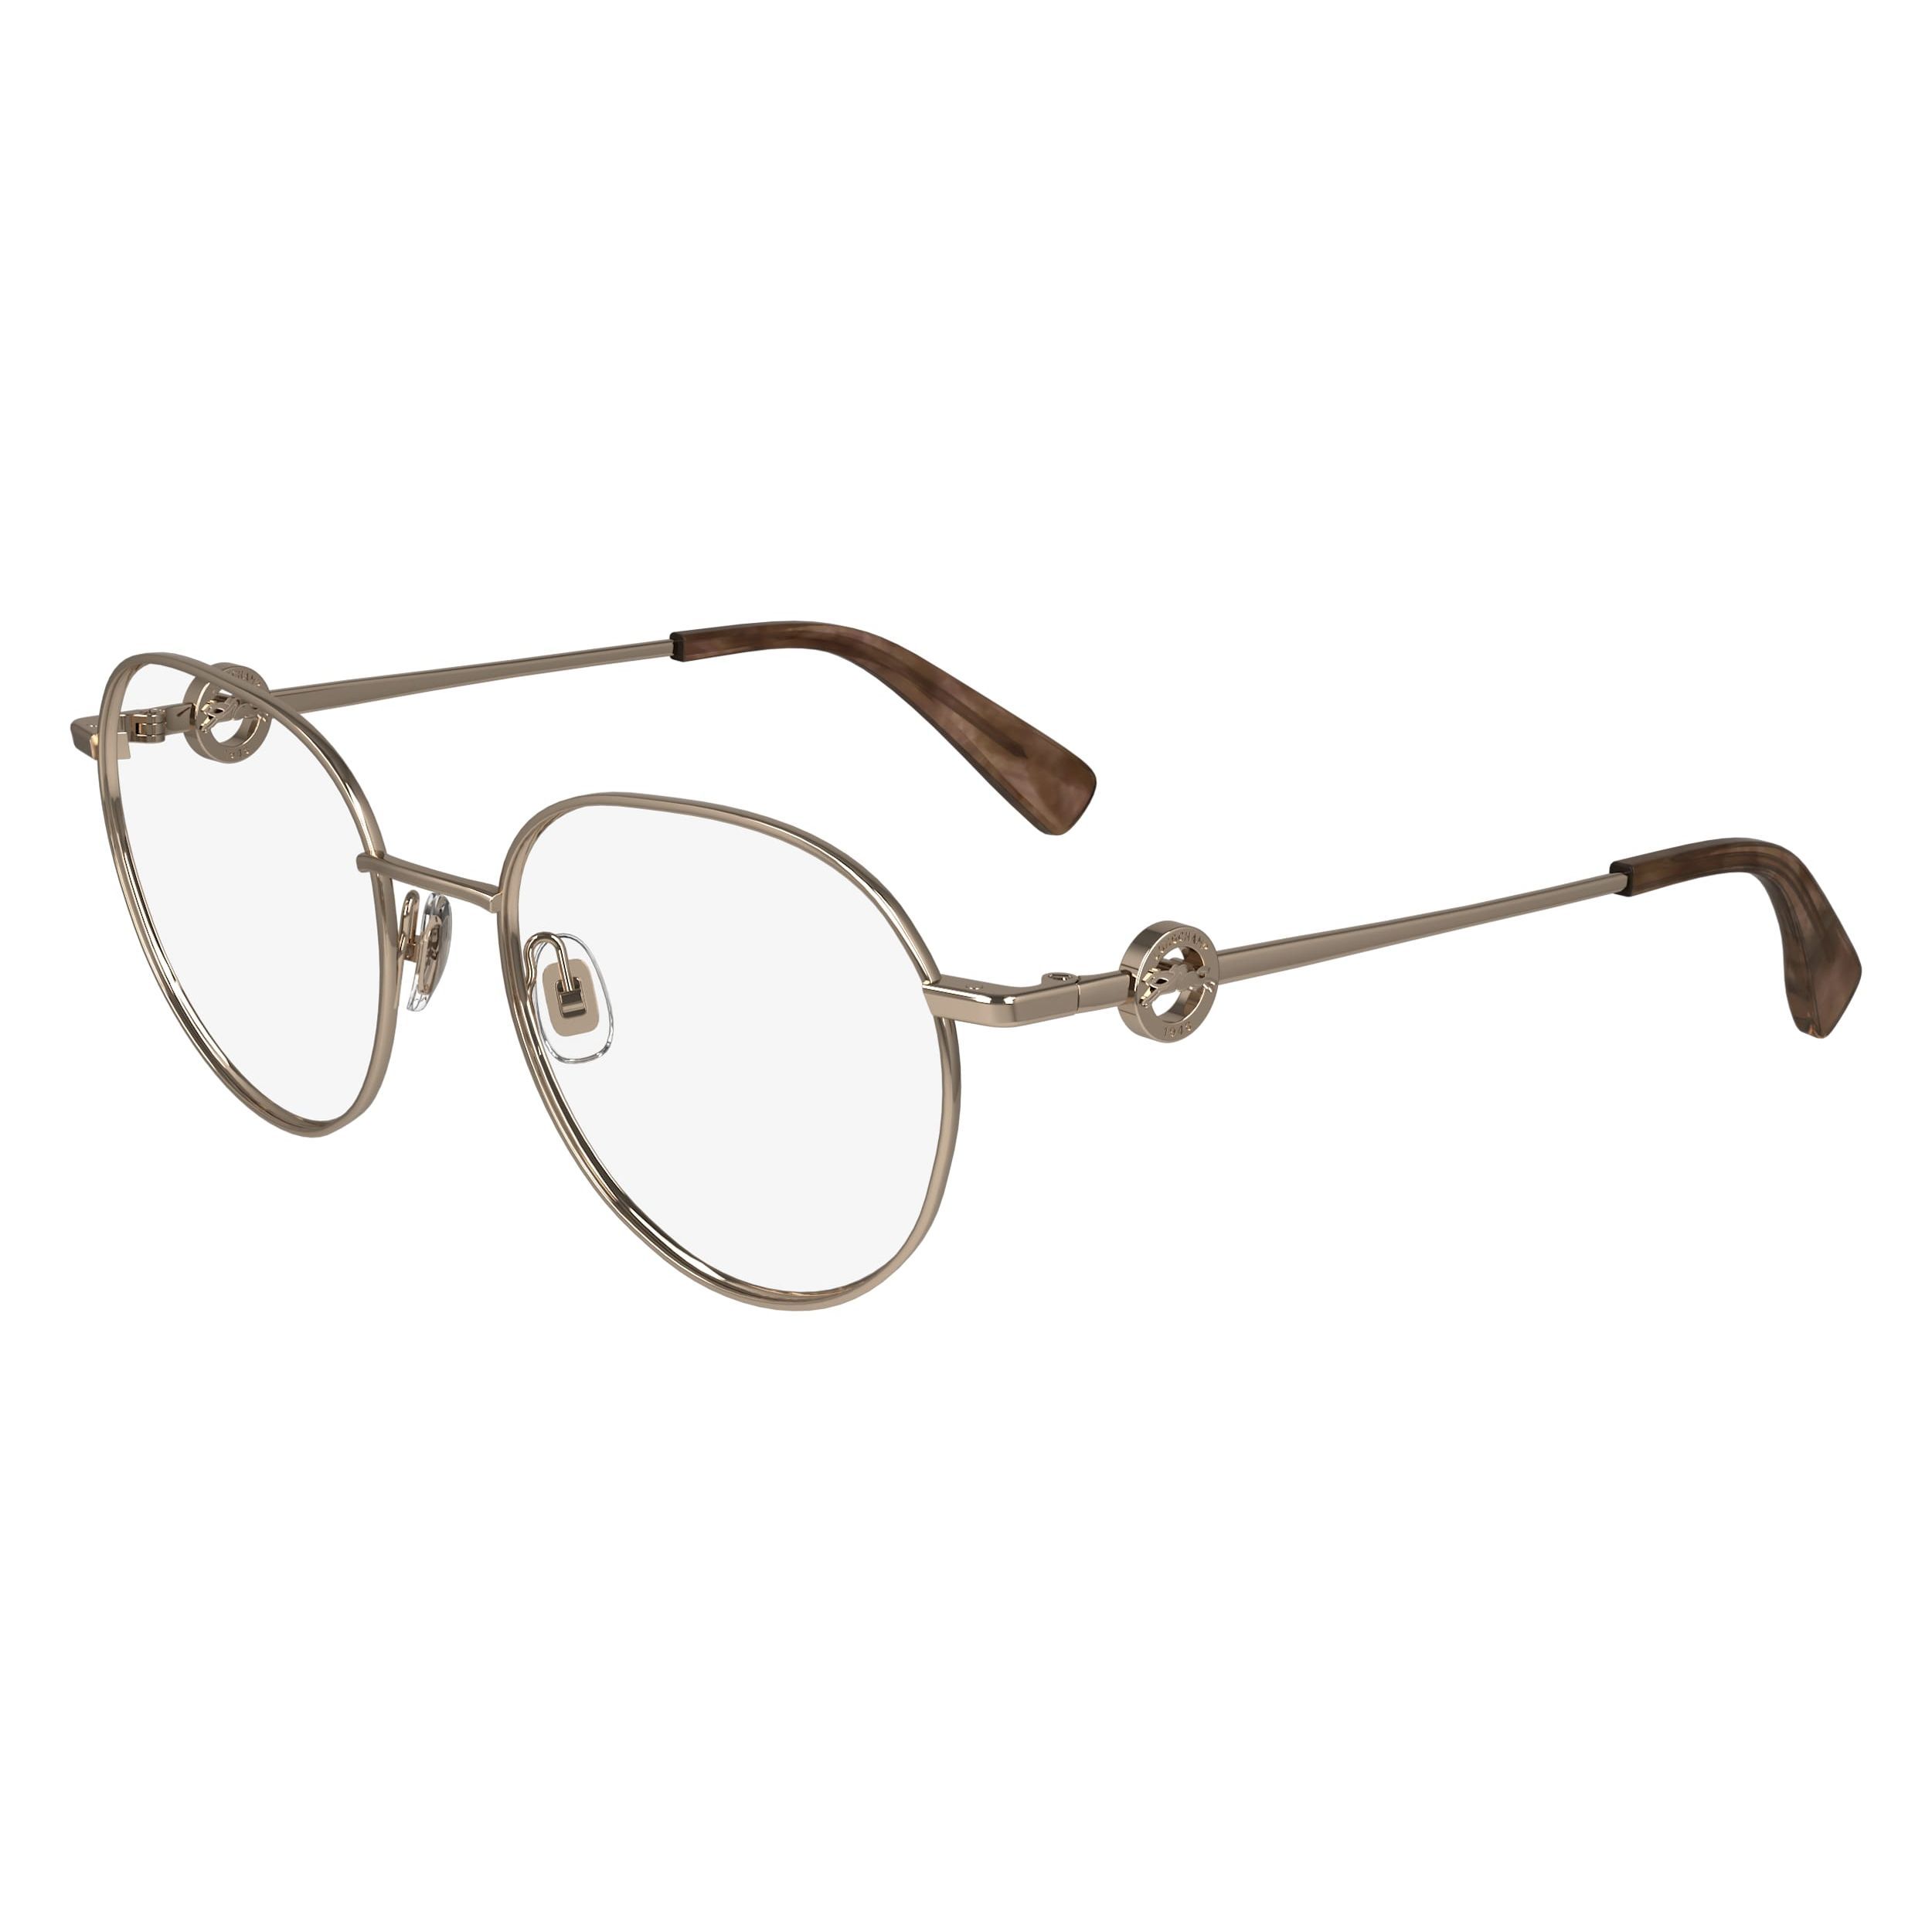 LO2165 Round Eyeglasses 770 - size 52